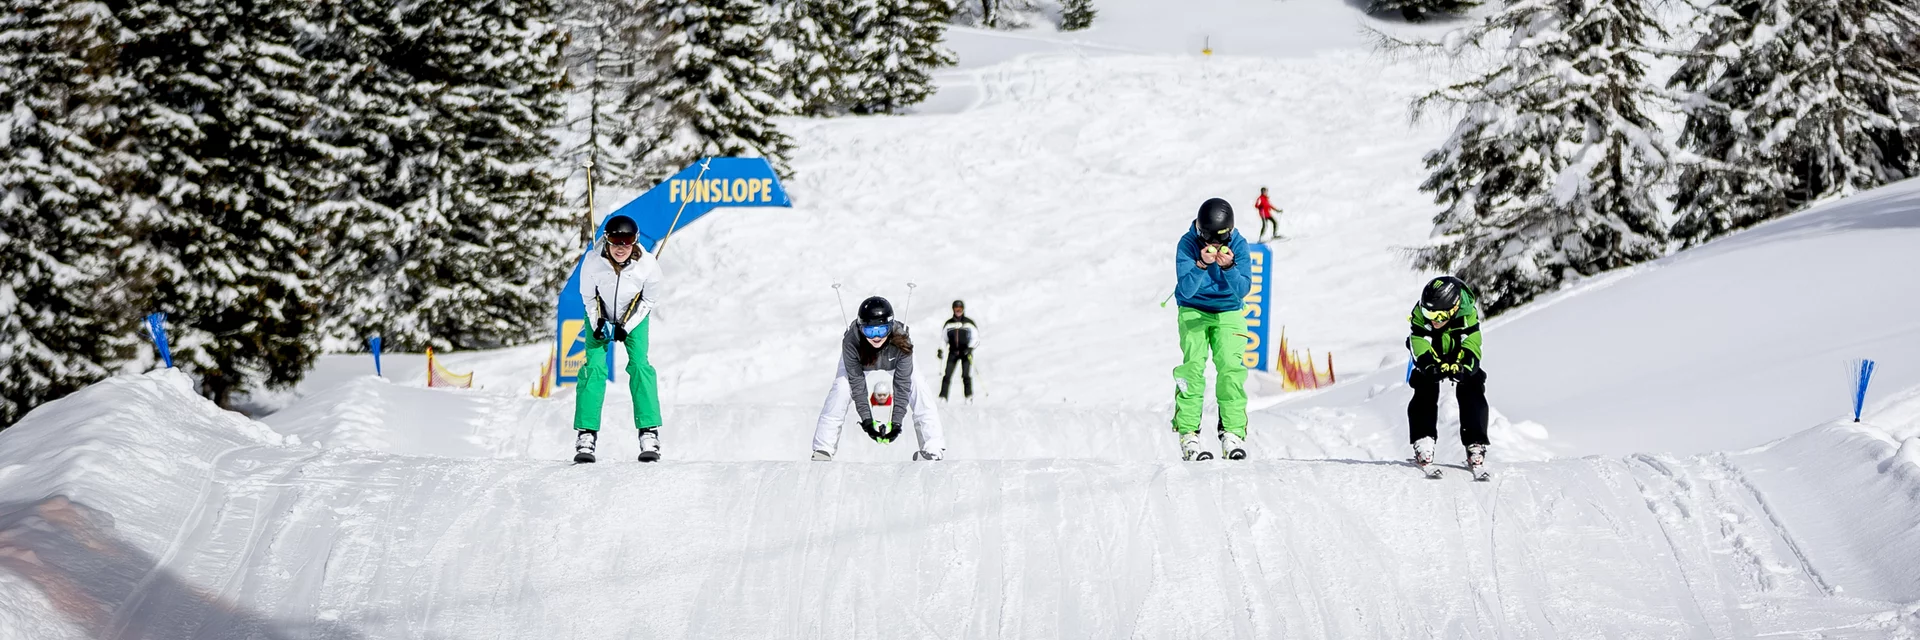 Skifahrer-Jugend auf der Fun Slope am Hauser Kaibling | © STG | Tom Lamm